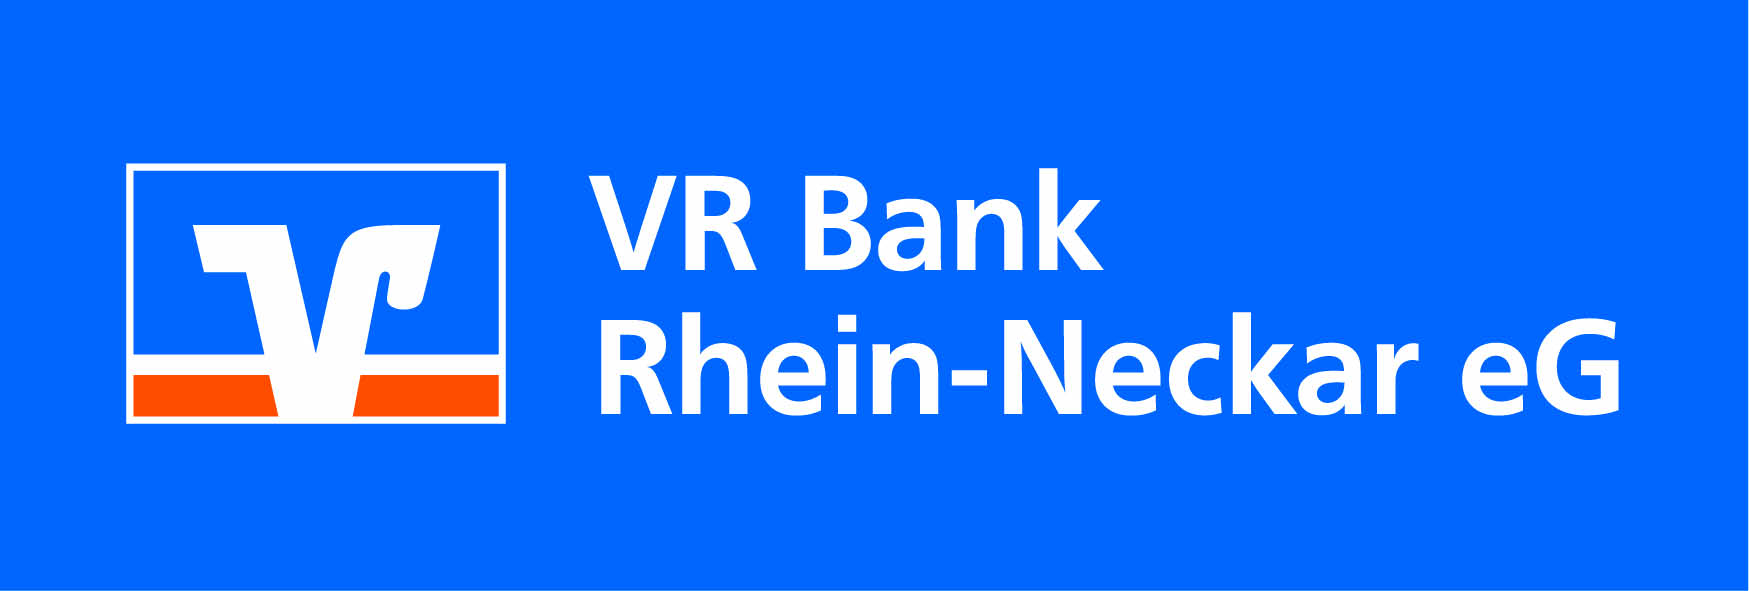 sp_VR_ Bank